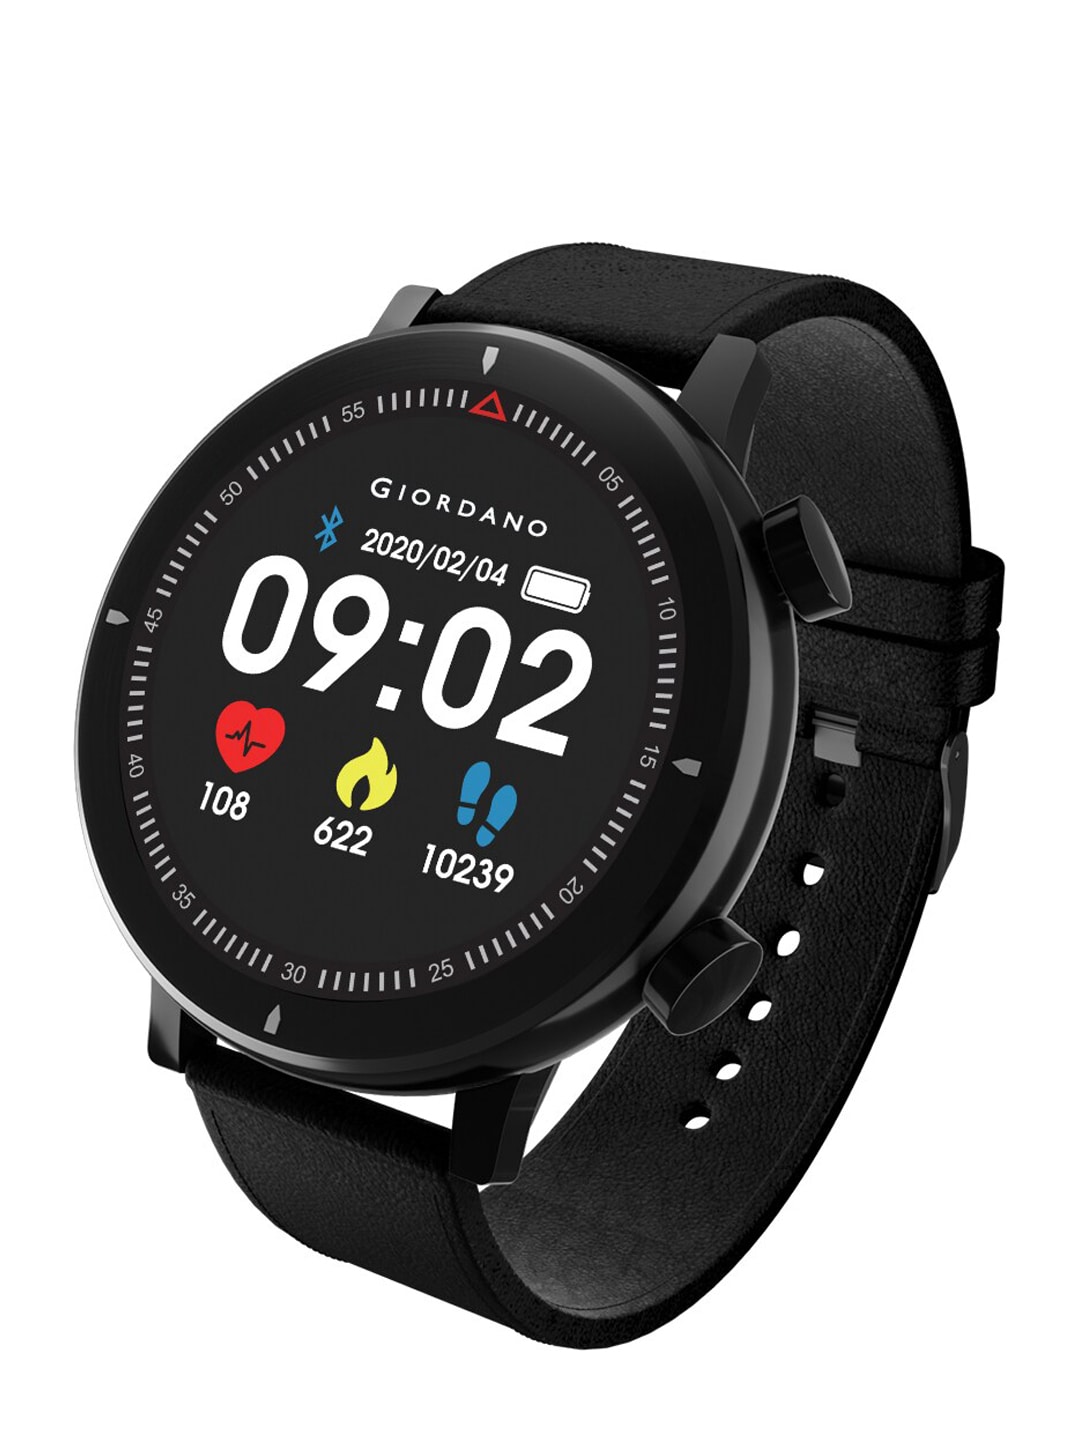 GIORDANO Unisex Black Smart Watch GT03-BK Price in India